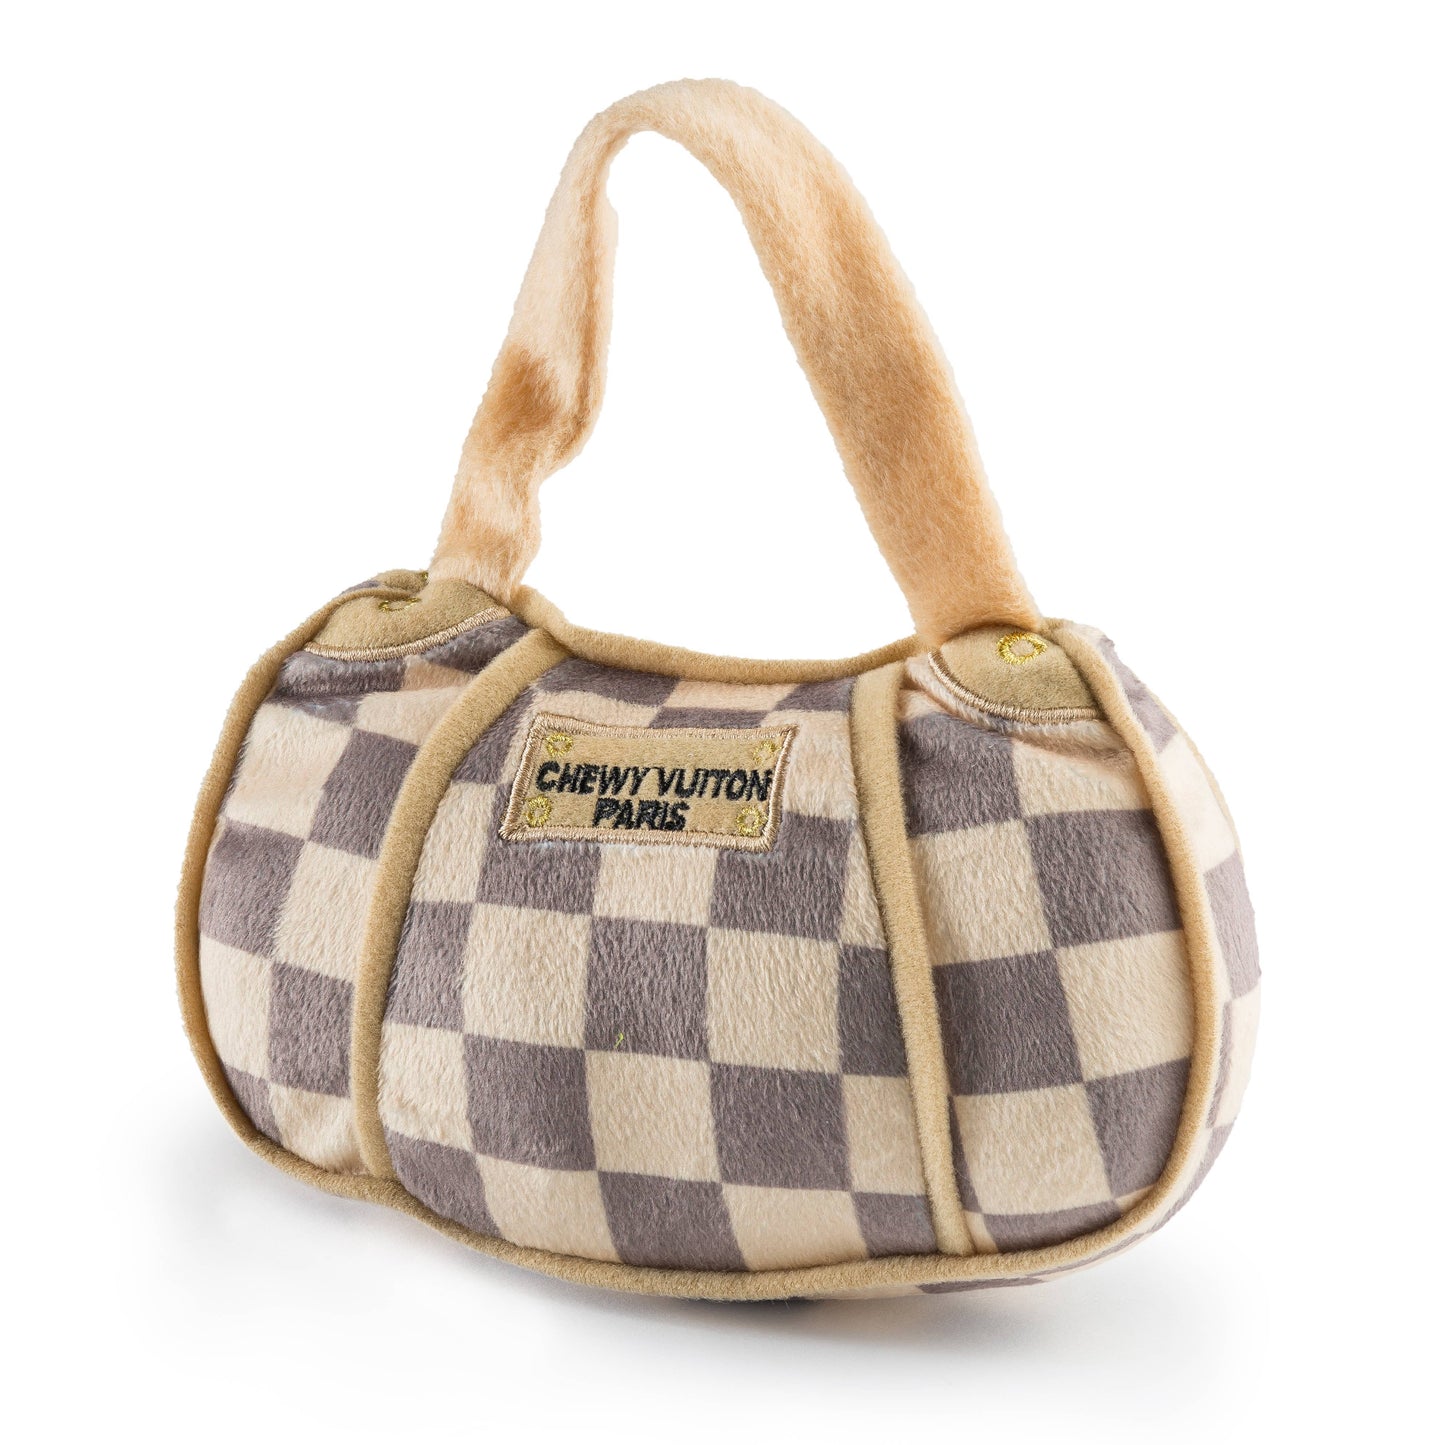 Checker Chewy Vuiton Handbag Dog Toy: Small